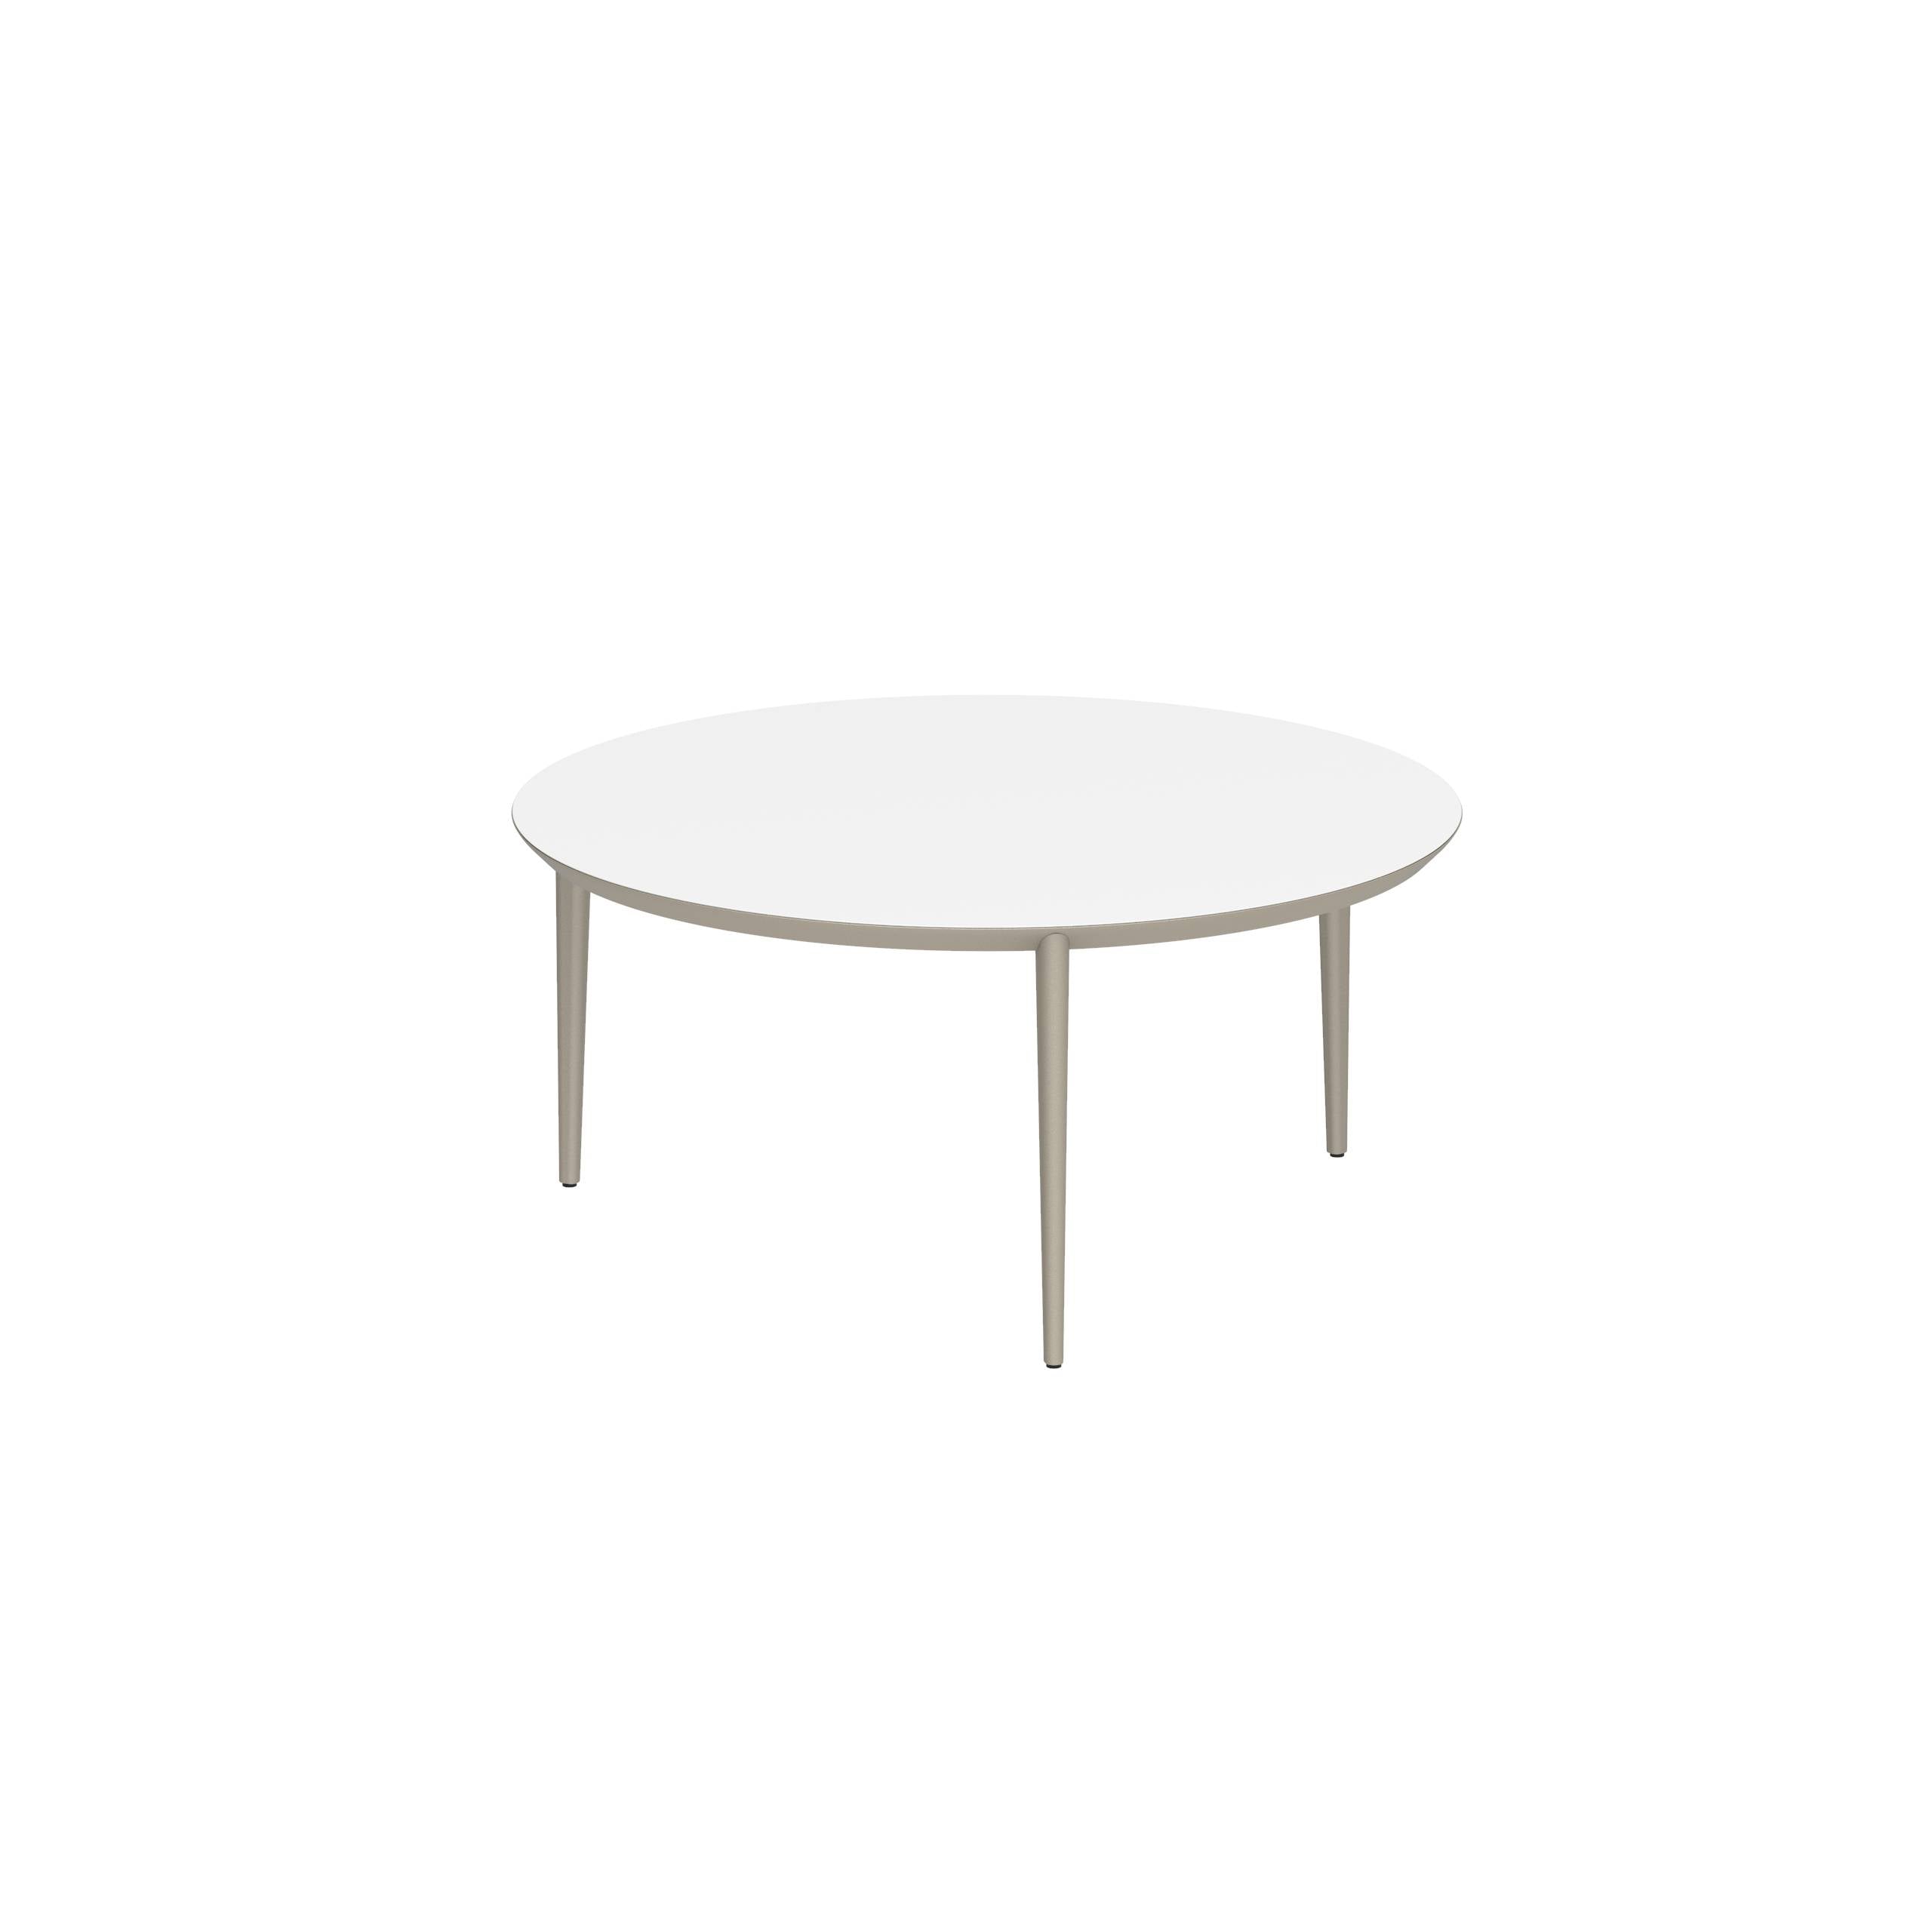 U-Nite Table Round Ø 160cm Alu Legs Sand - Table Top Ceramic White